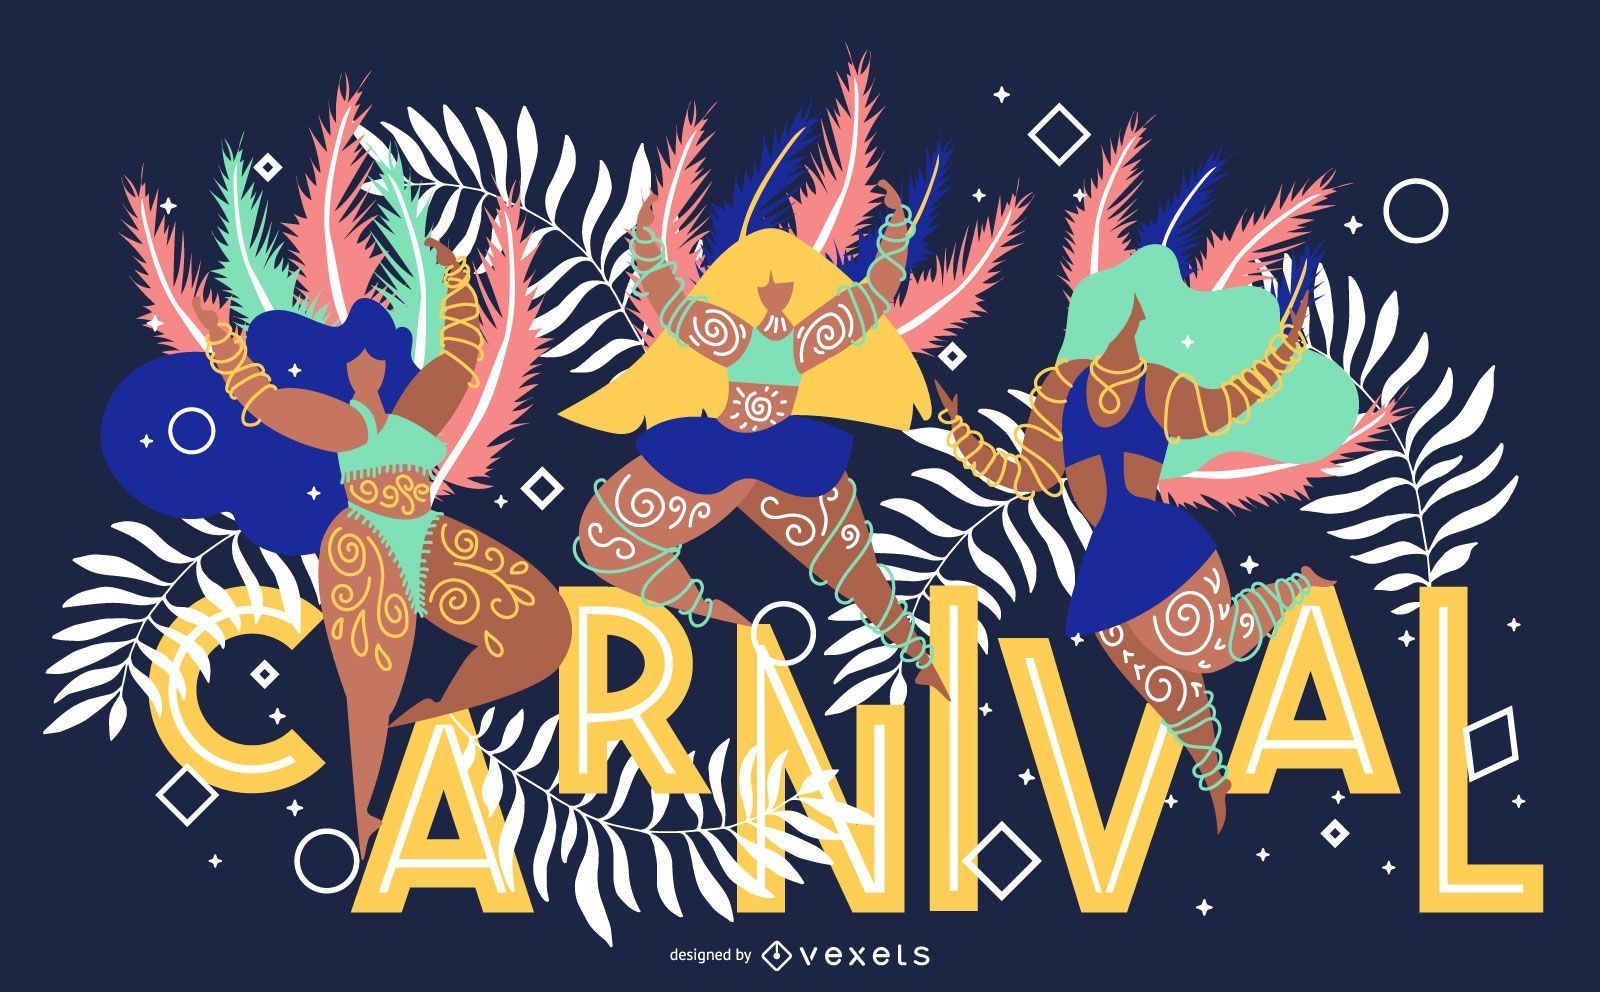 Carnival Artistic Banner Design